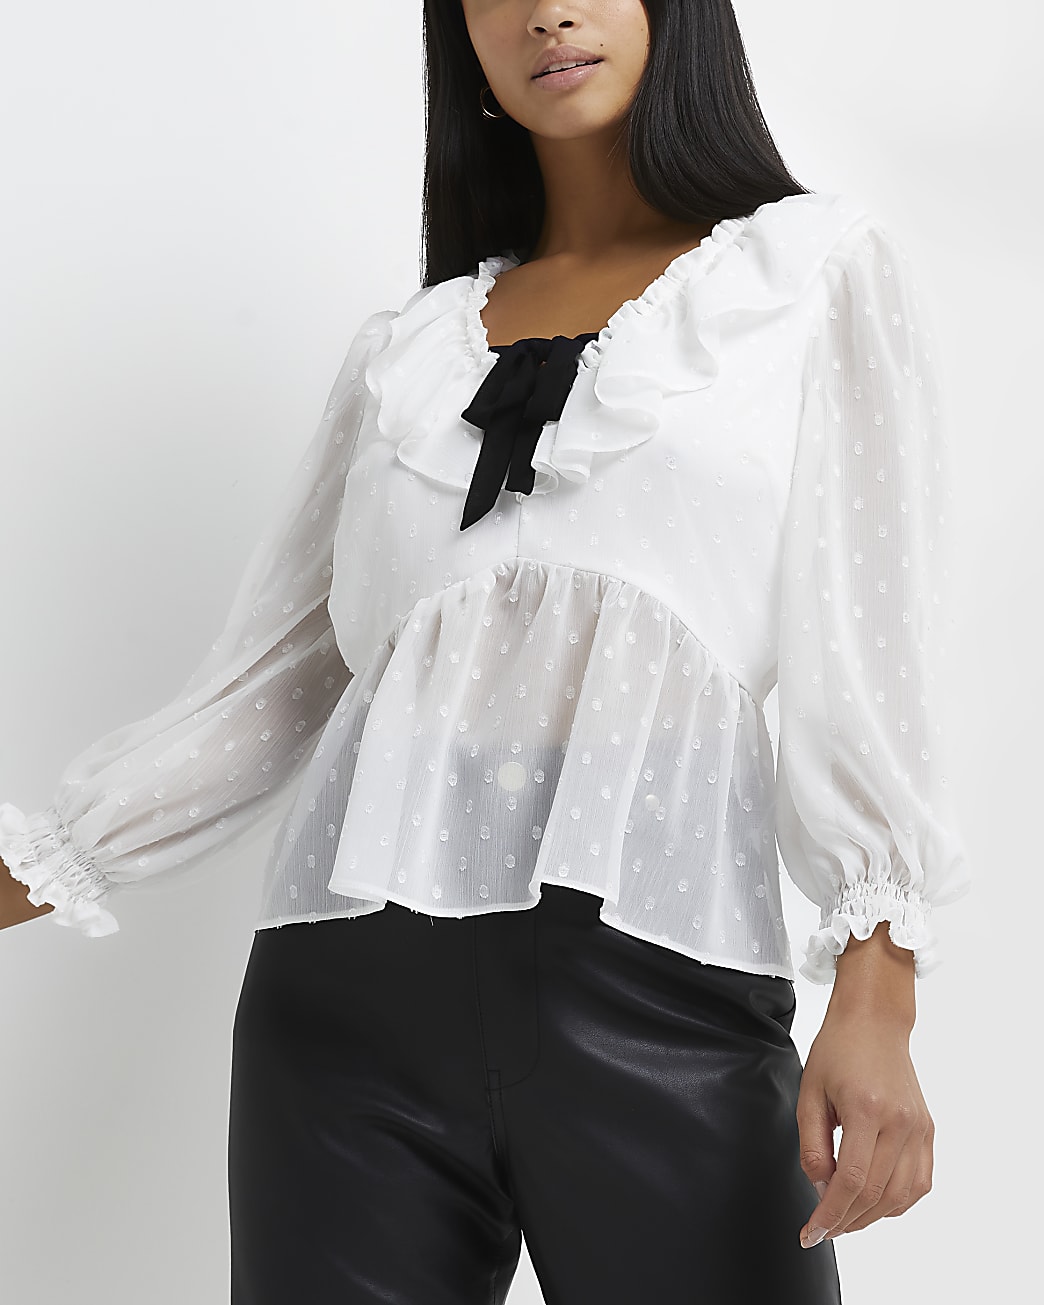 Petite white chiffon blouse